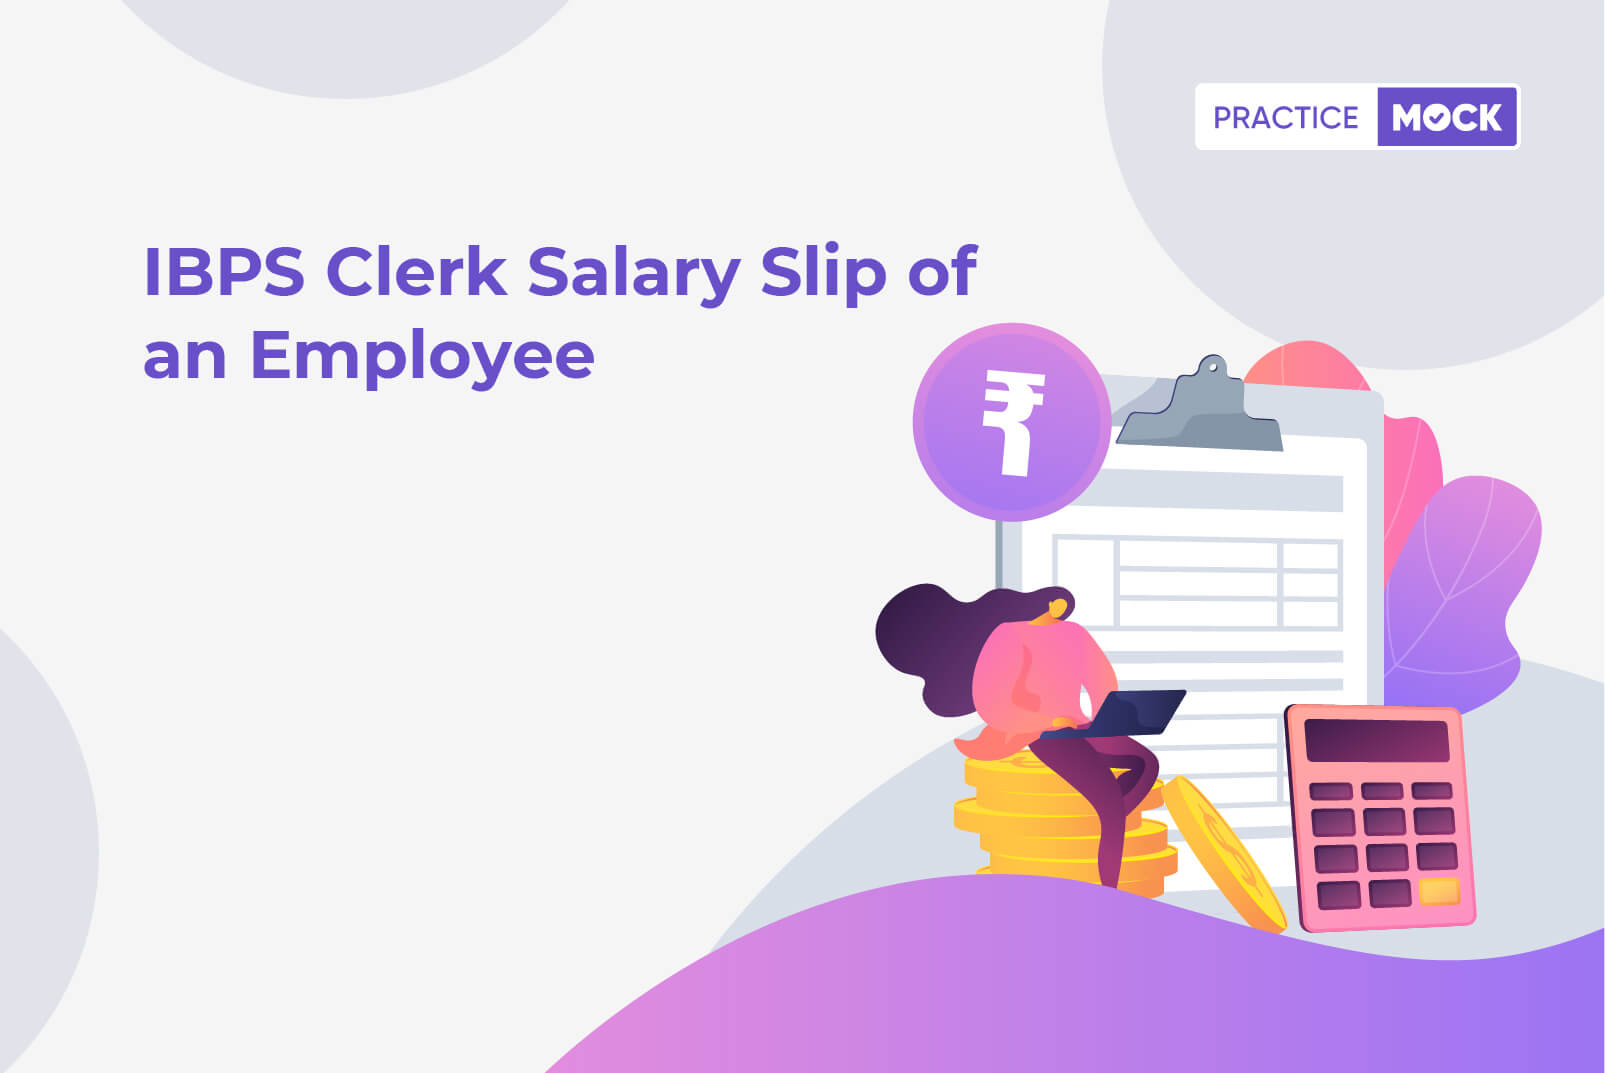 IBPS Clerk Salary Slip of an Employee